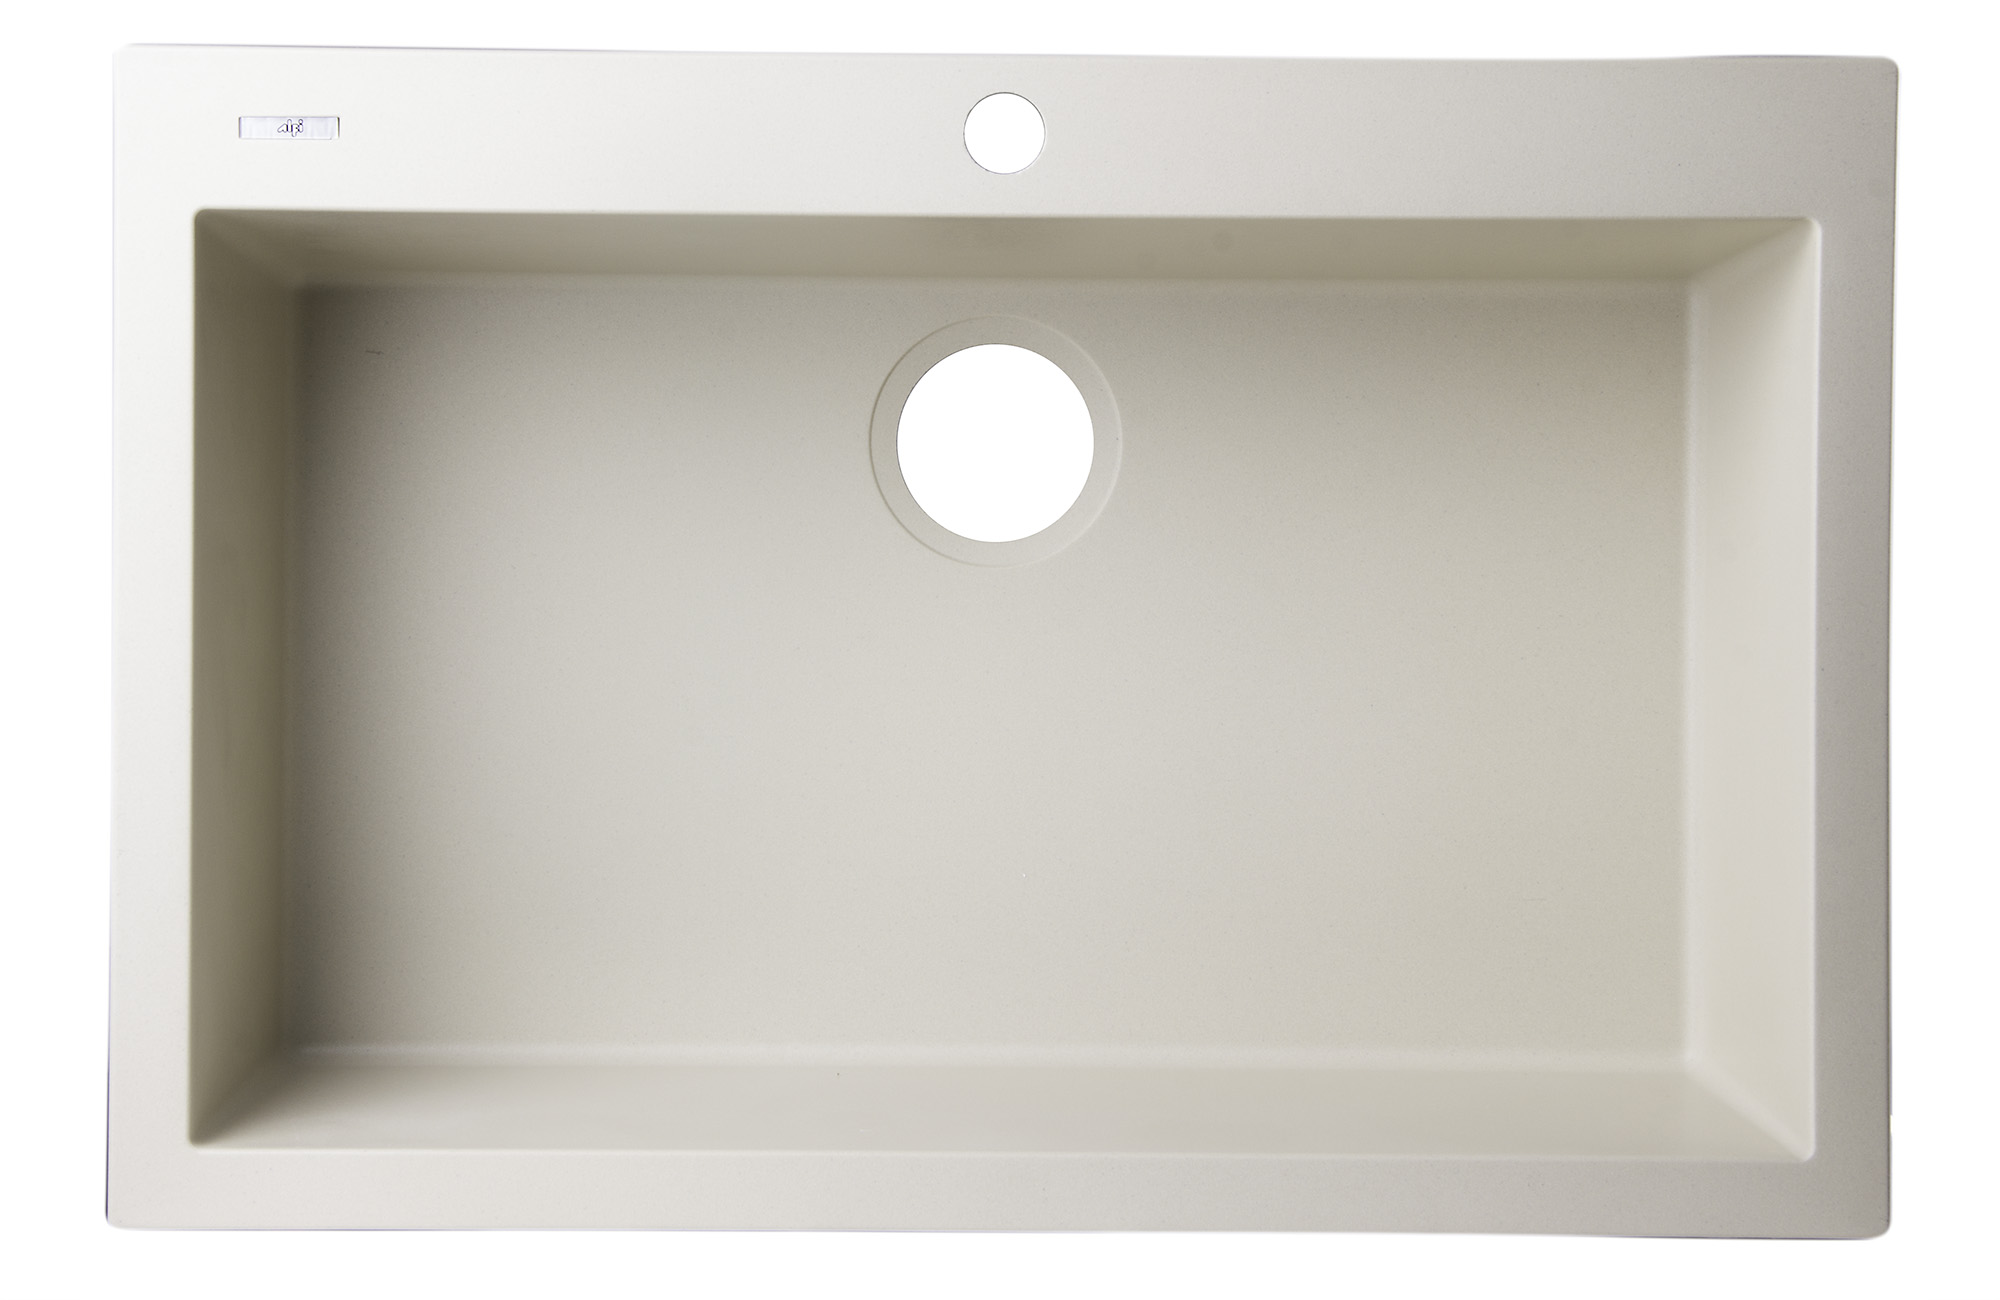 ALFI brand AB3020DI-B Biscuit 30" Drop-In Single Bowl Granite Composite Kitchen Sink